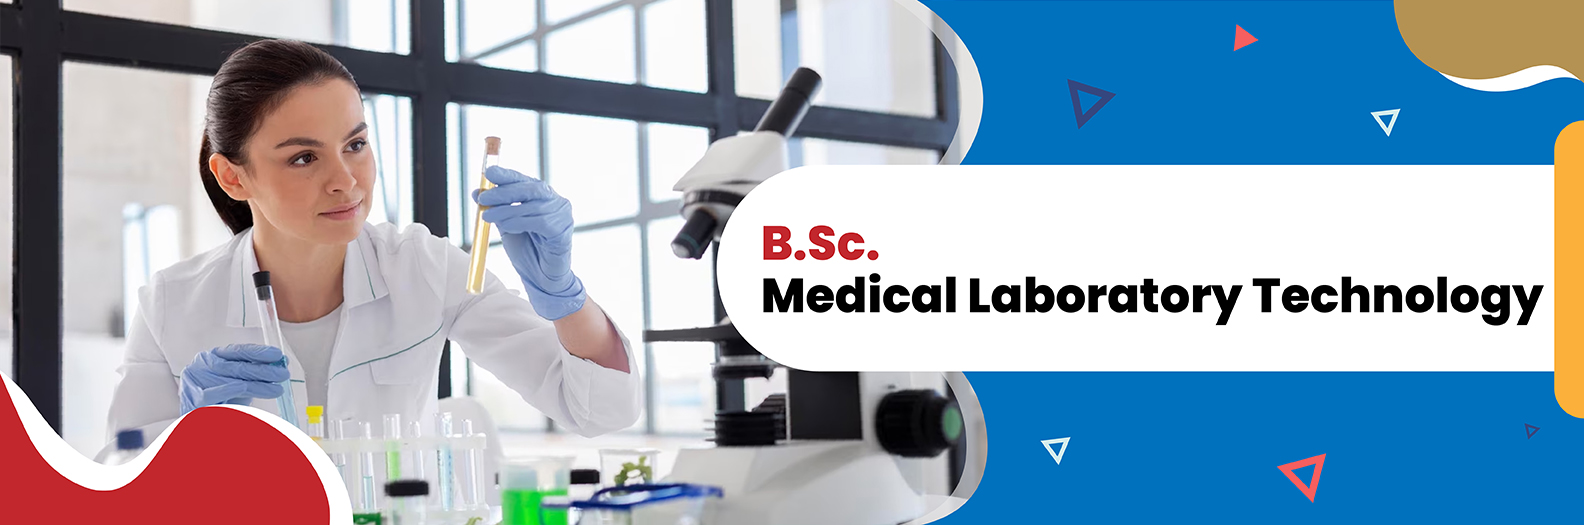 B.Sc. Medical Laboratory Technology